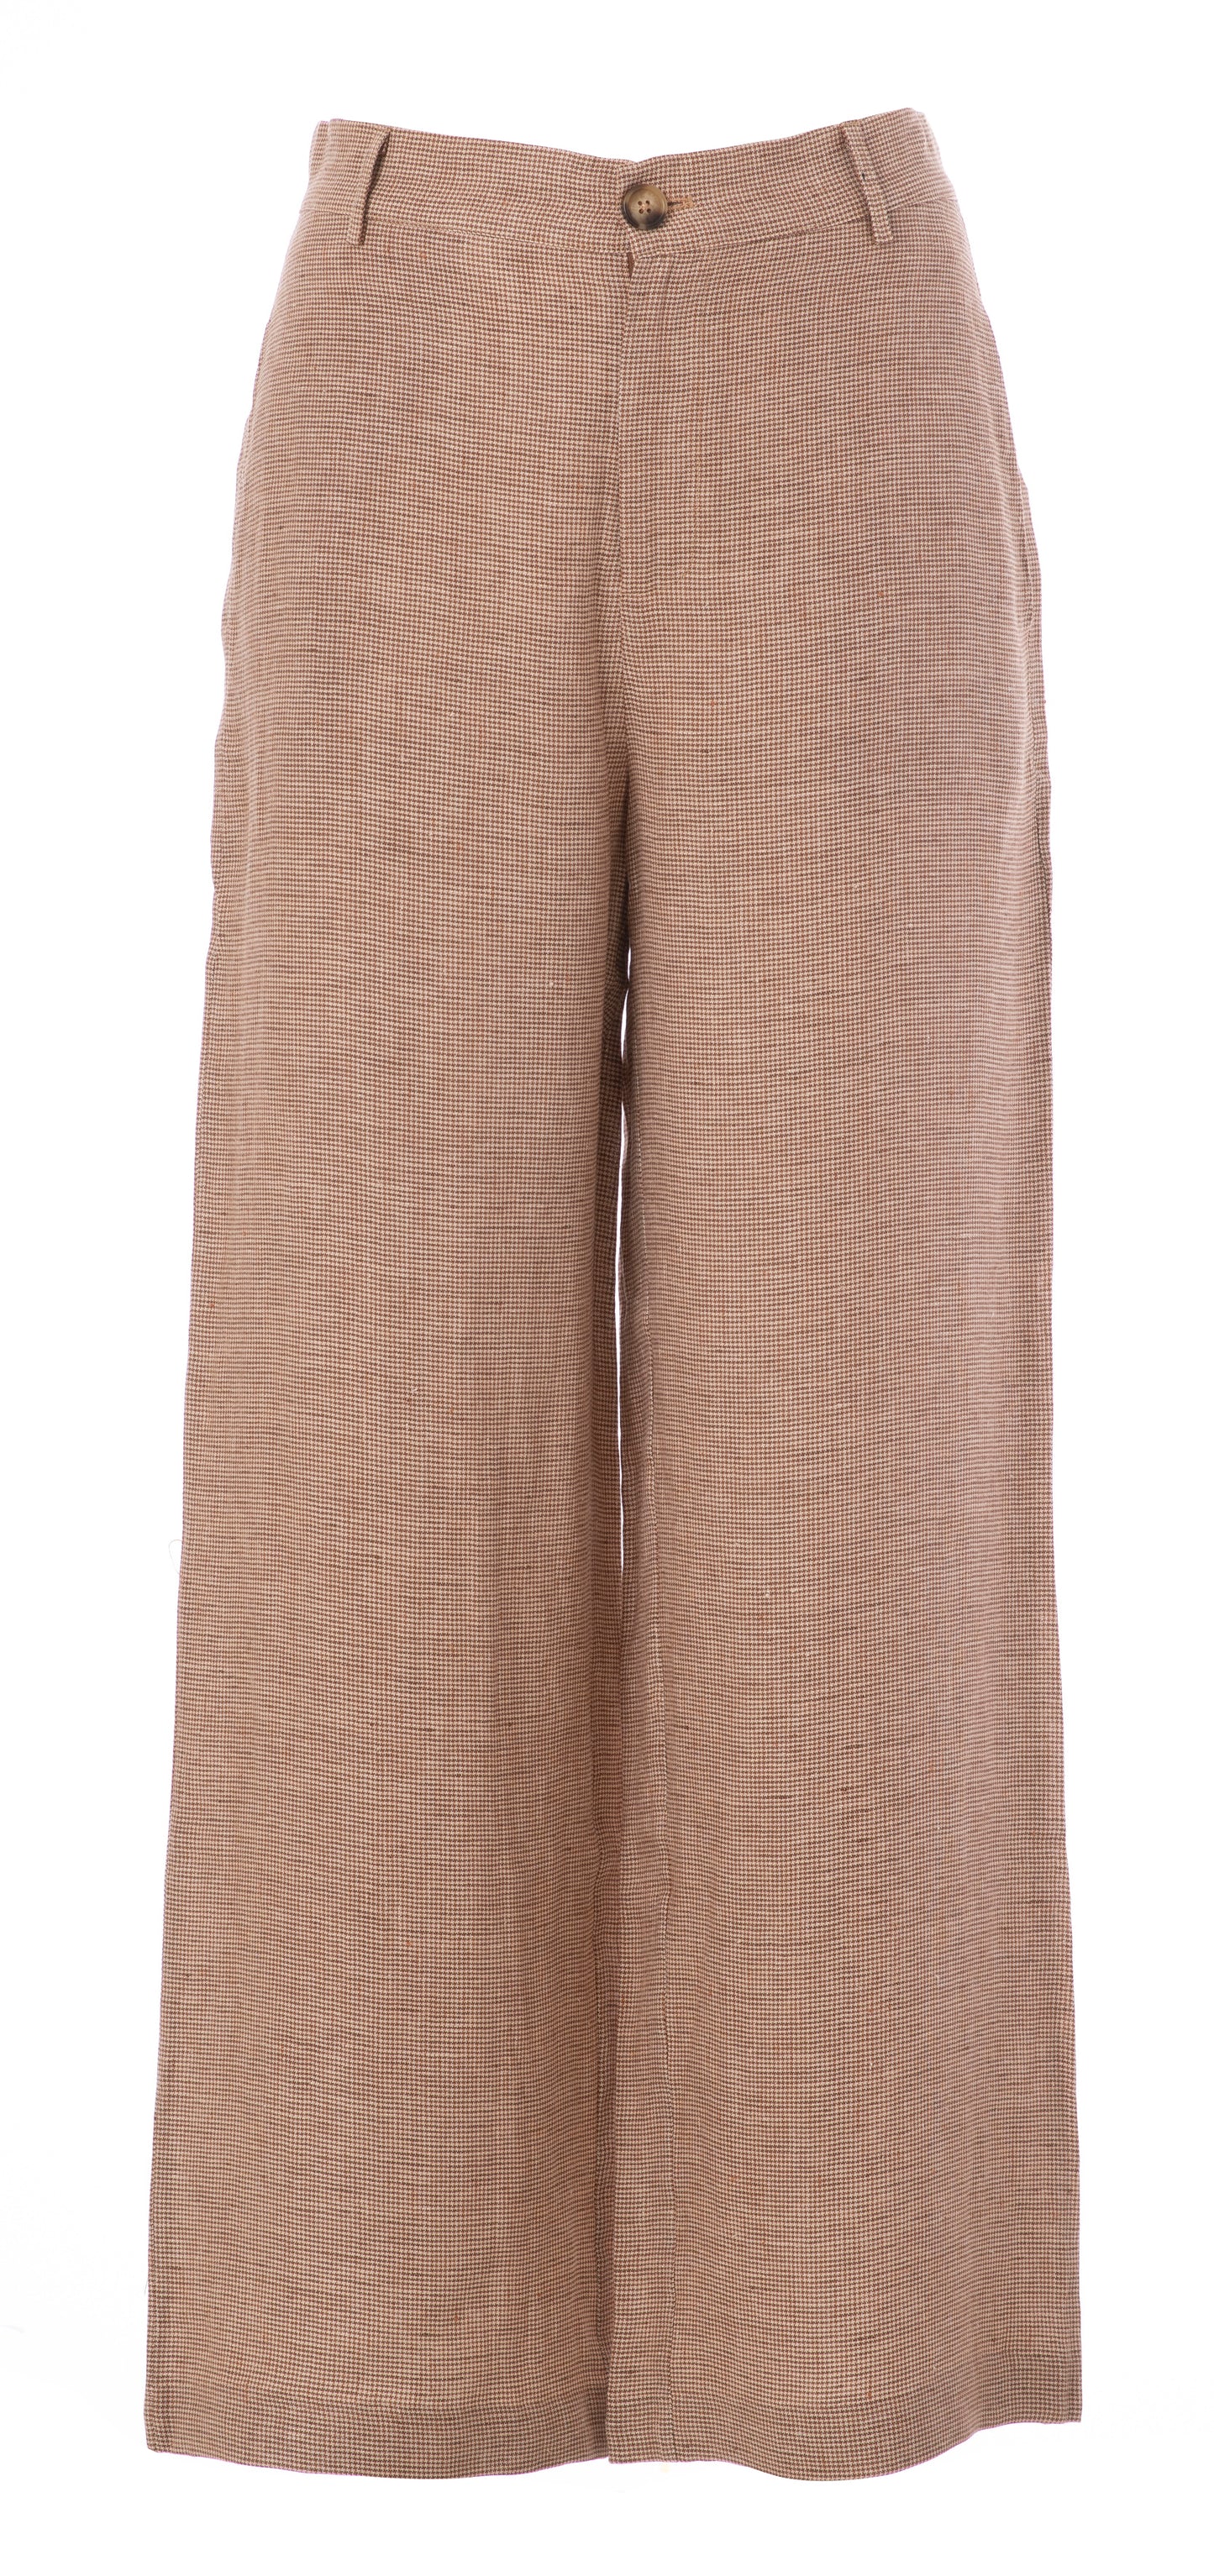 Jc Sophie - Charity trousers 100% linen